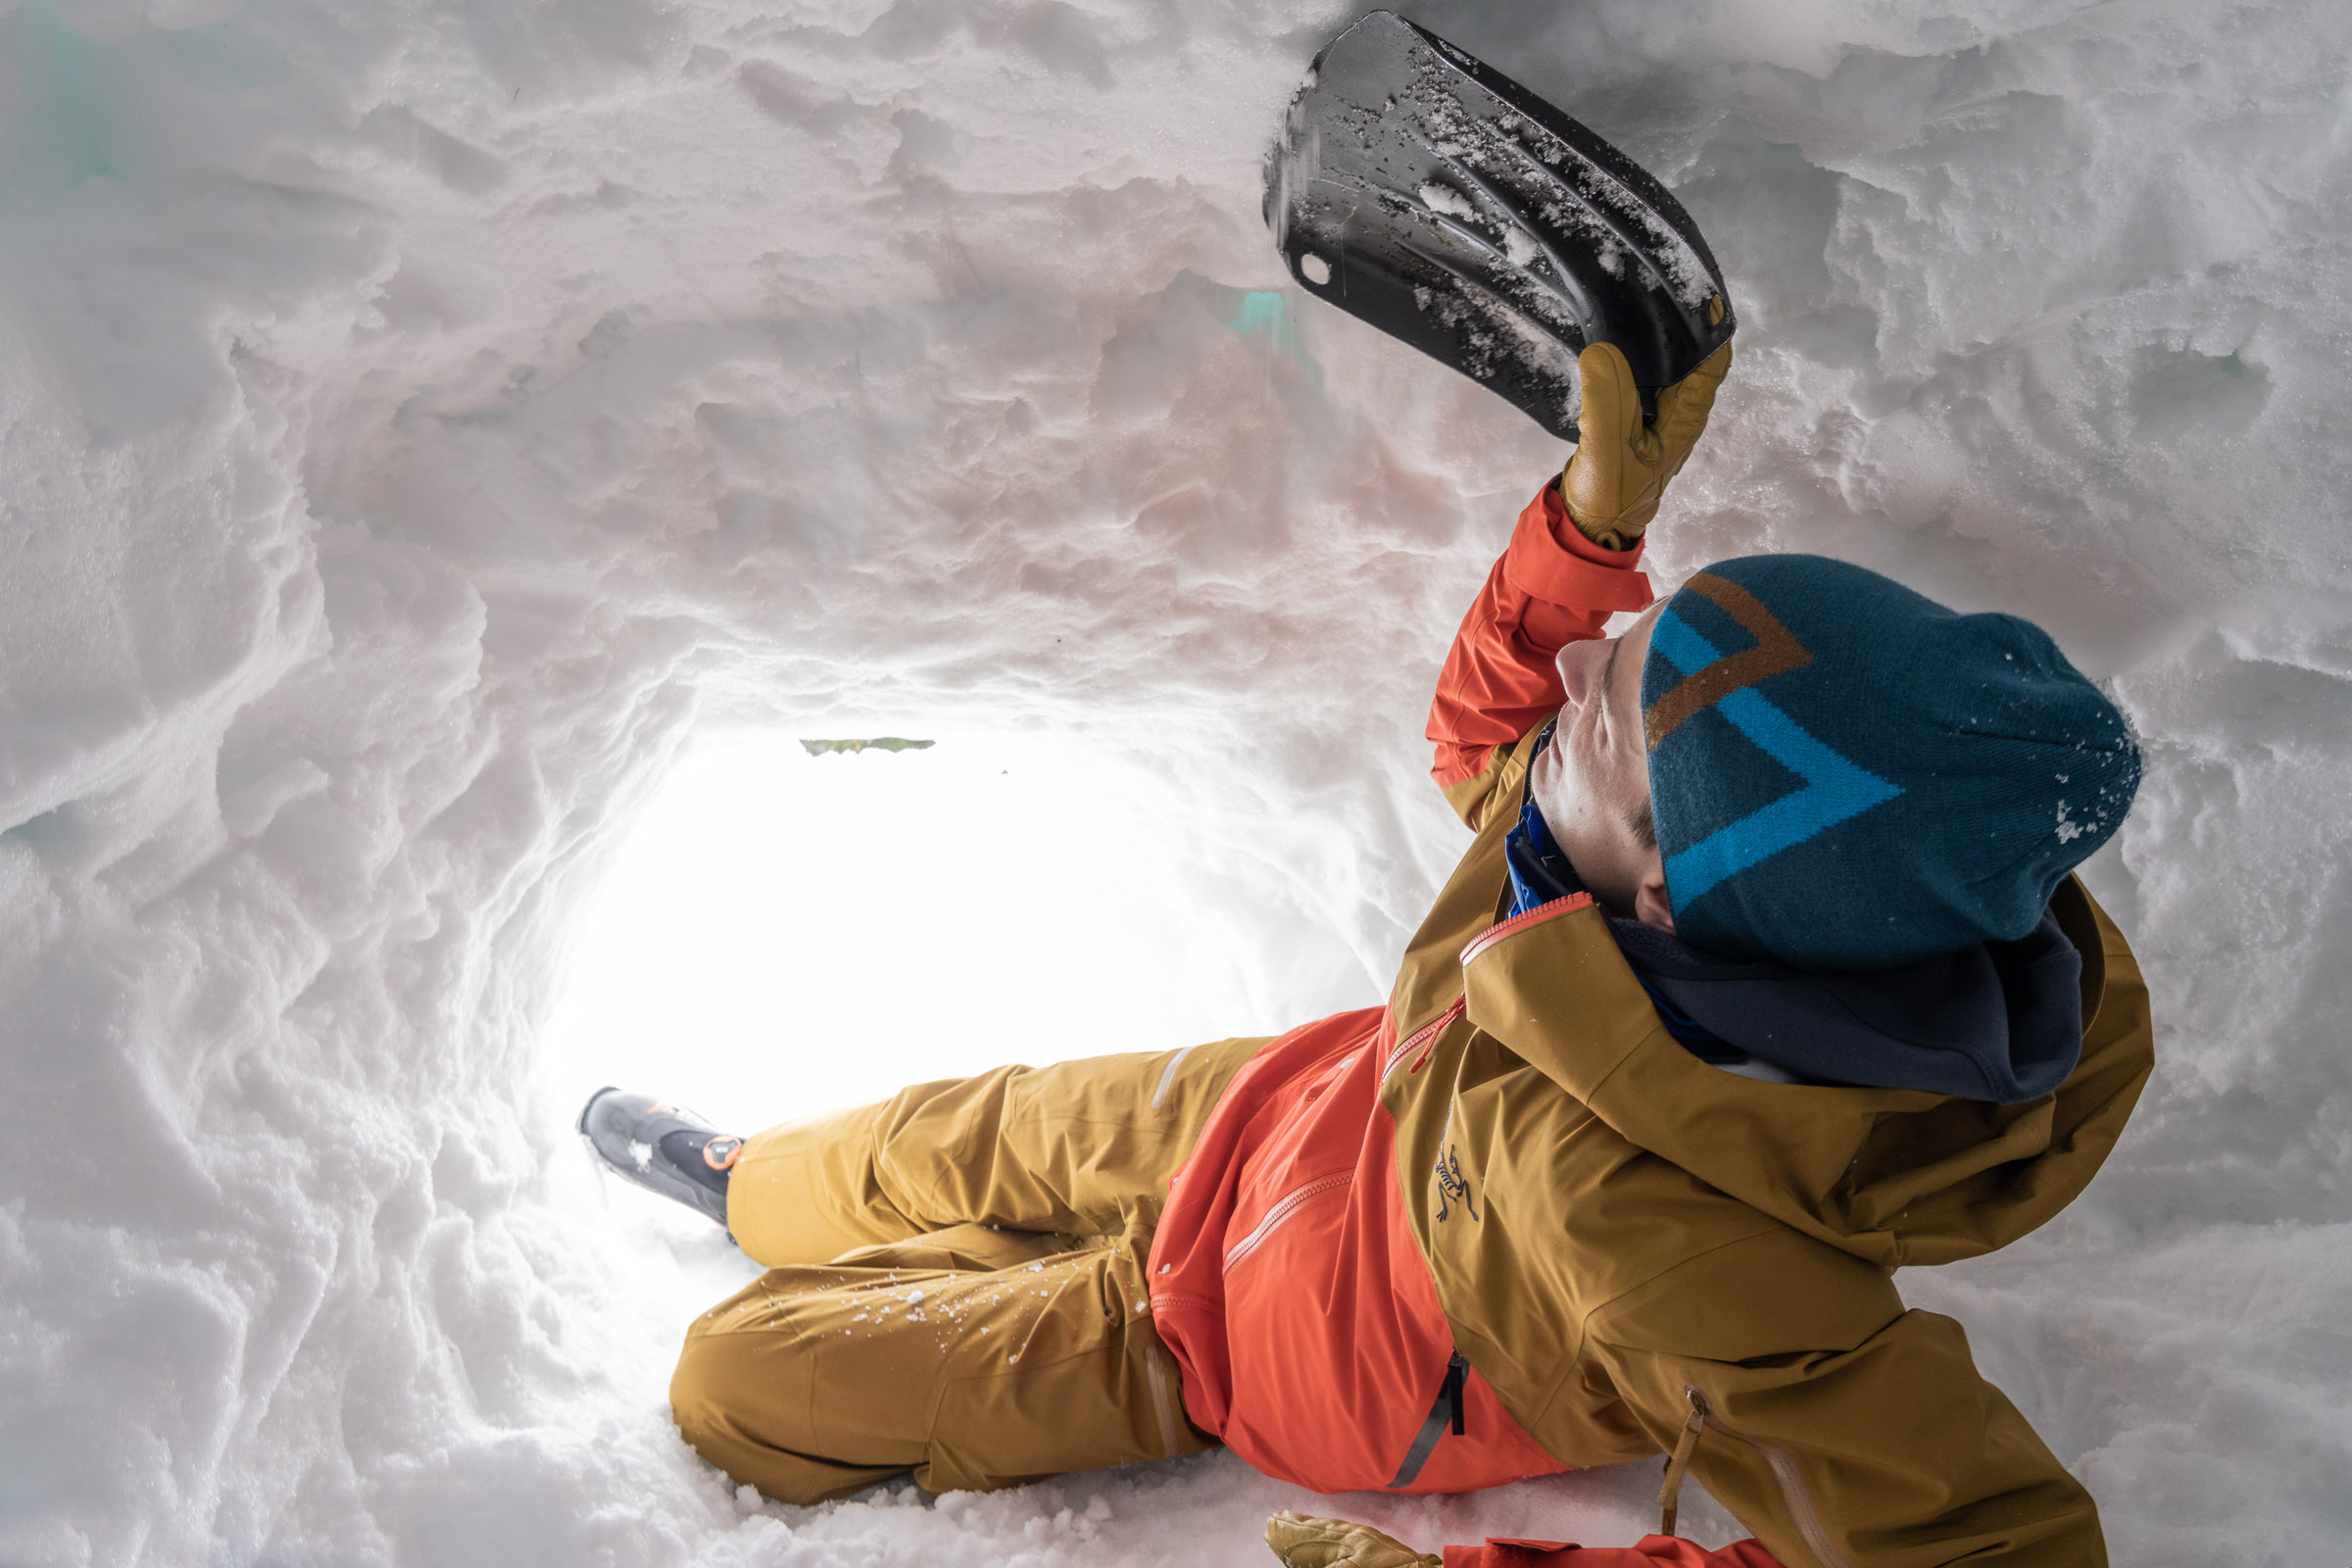 Benjamin Zörer digs a snow cave during the Arc'teryx Academy Freeride Edition